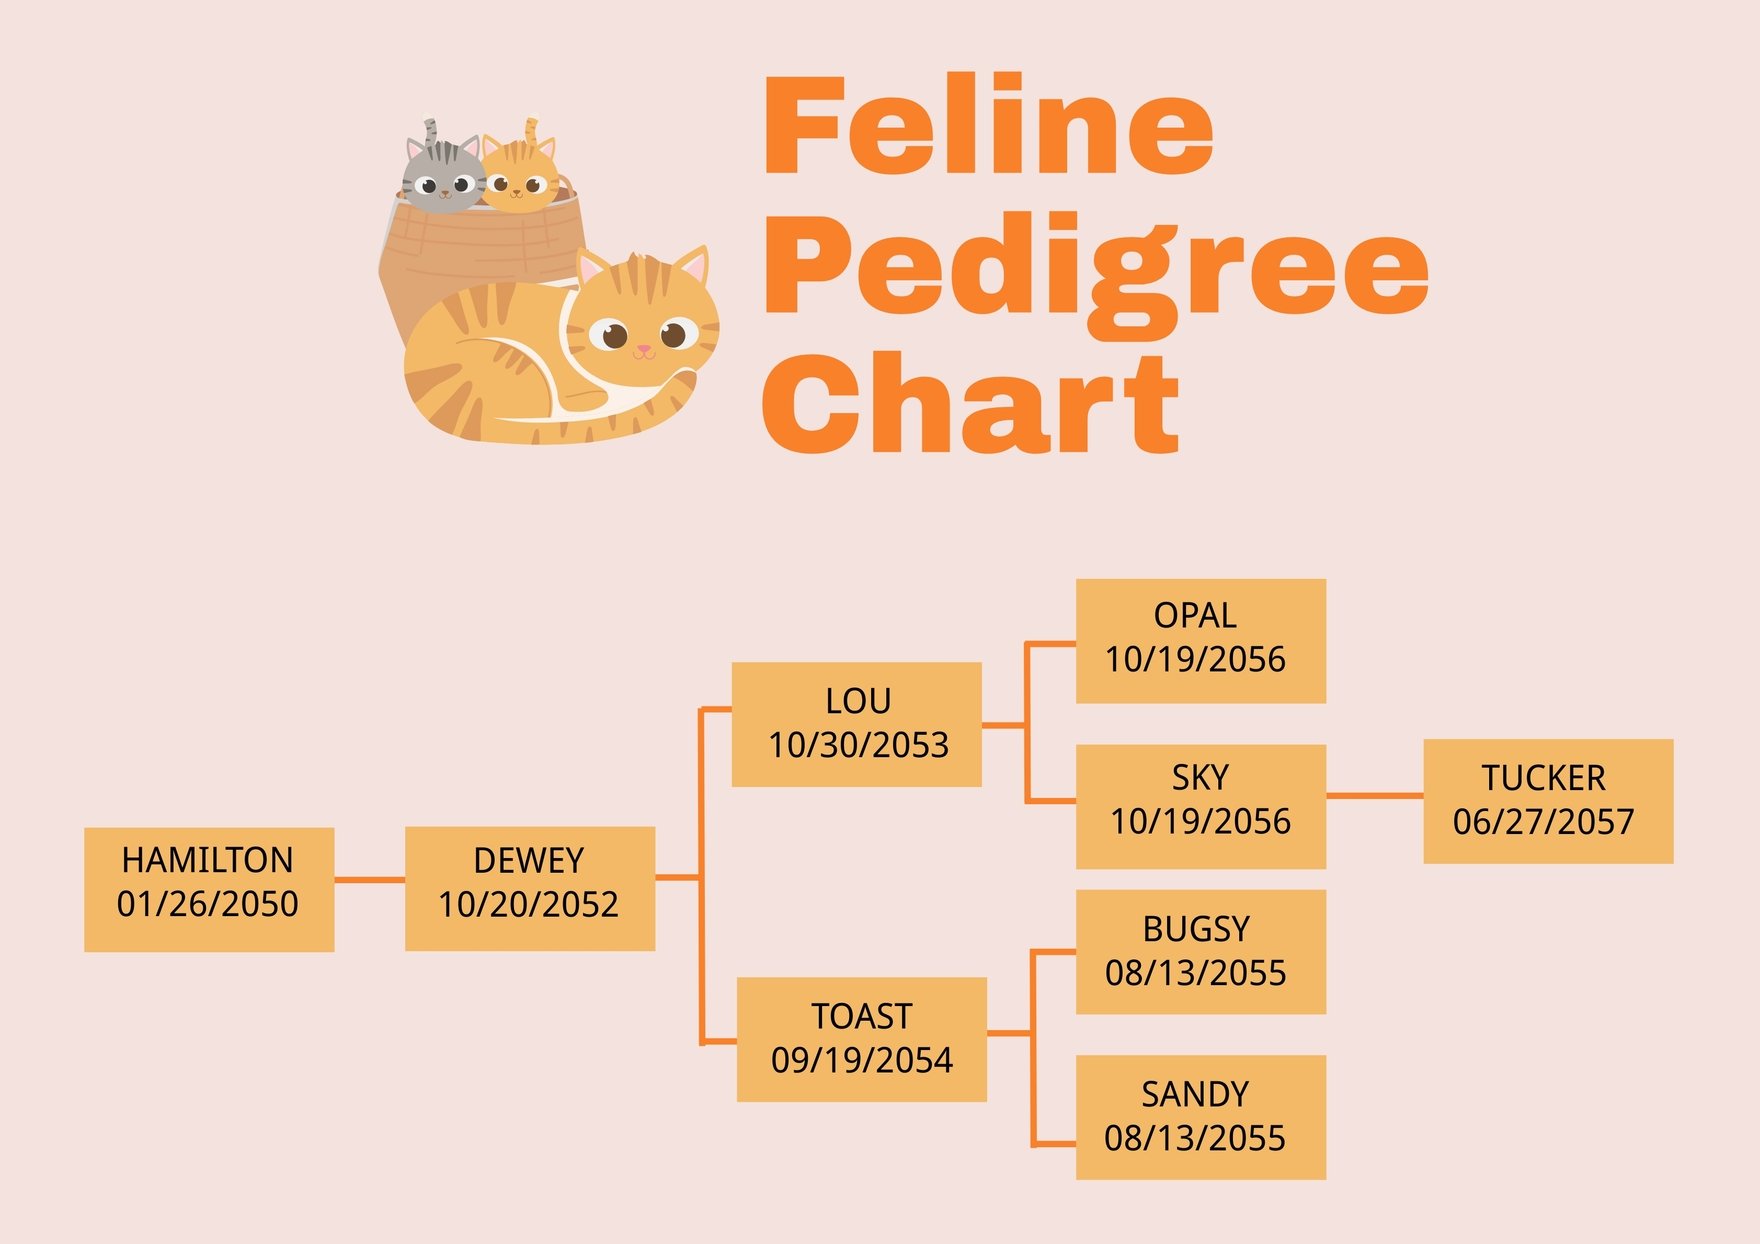 Feline Pedigree Chart